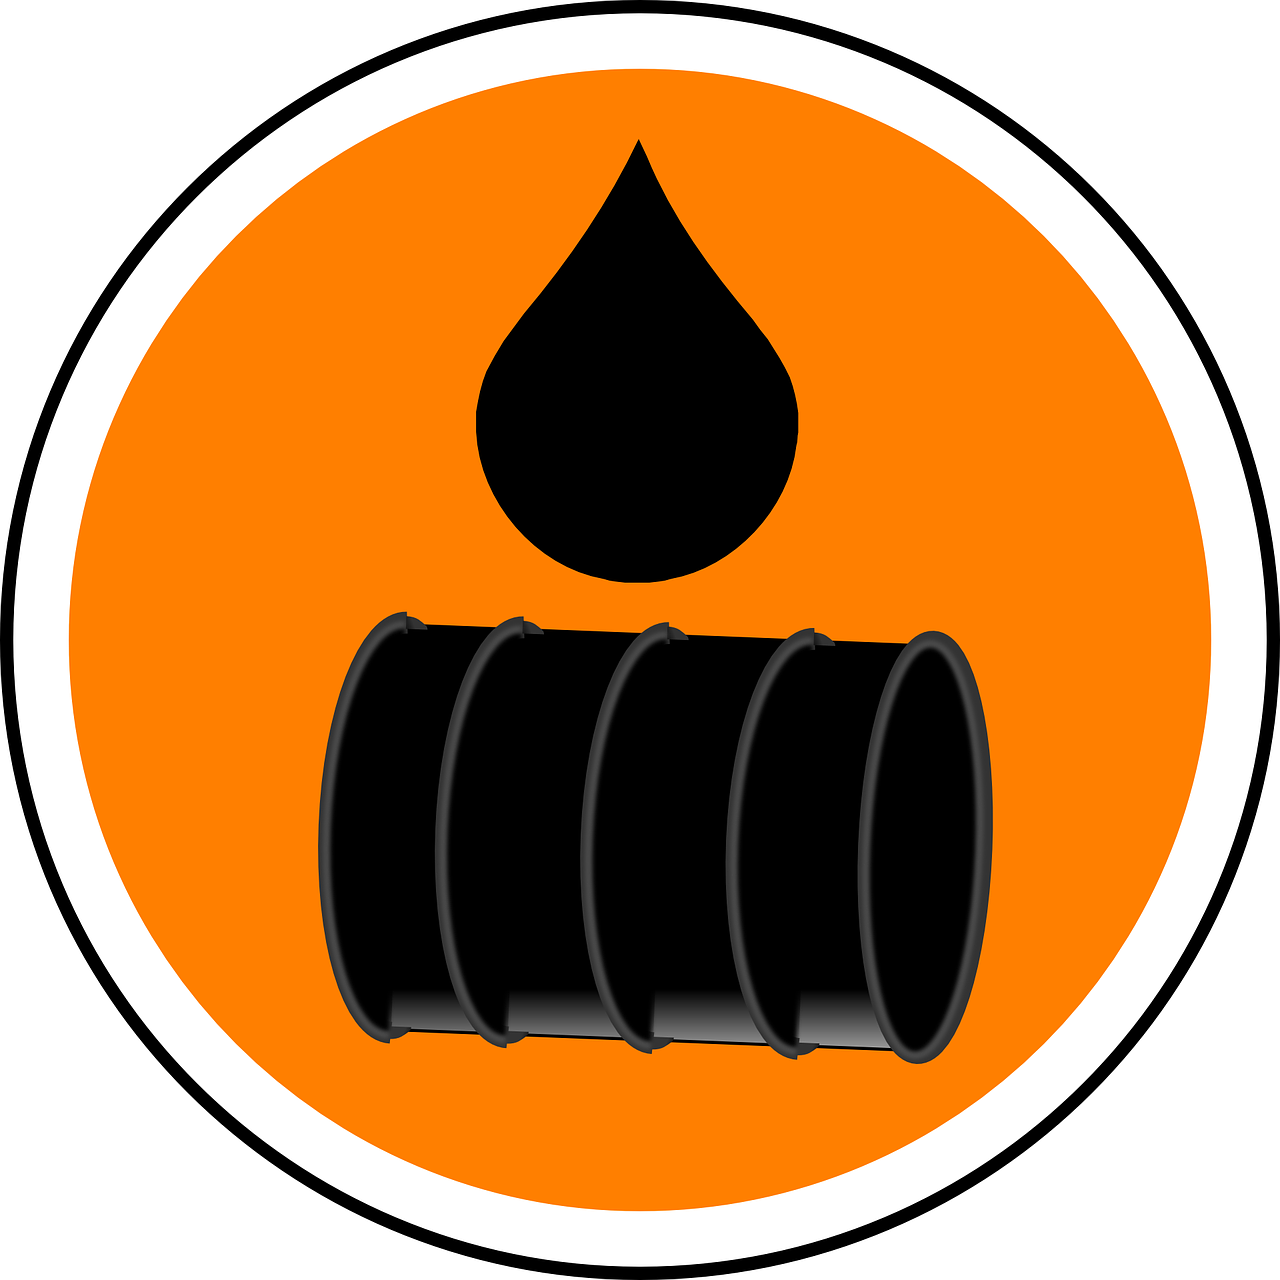 ОПЕК+ сокращает добычу нефти рекордно с пандемии